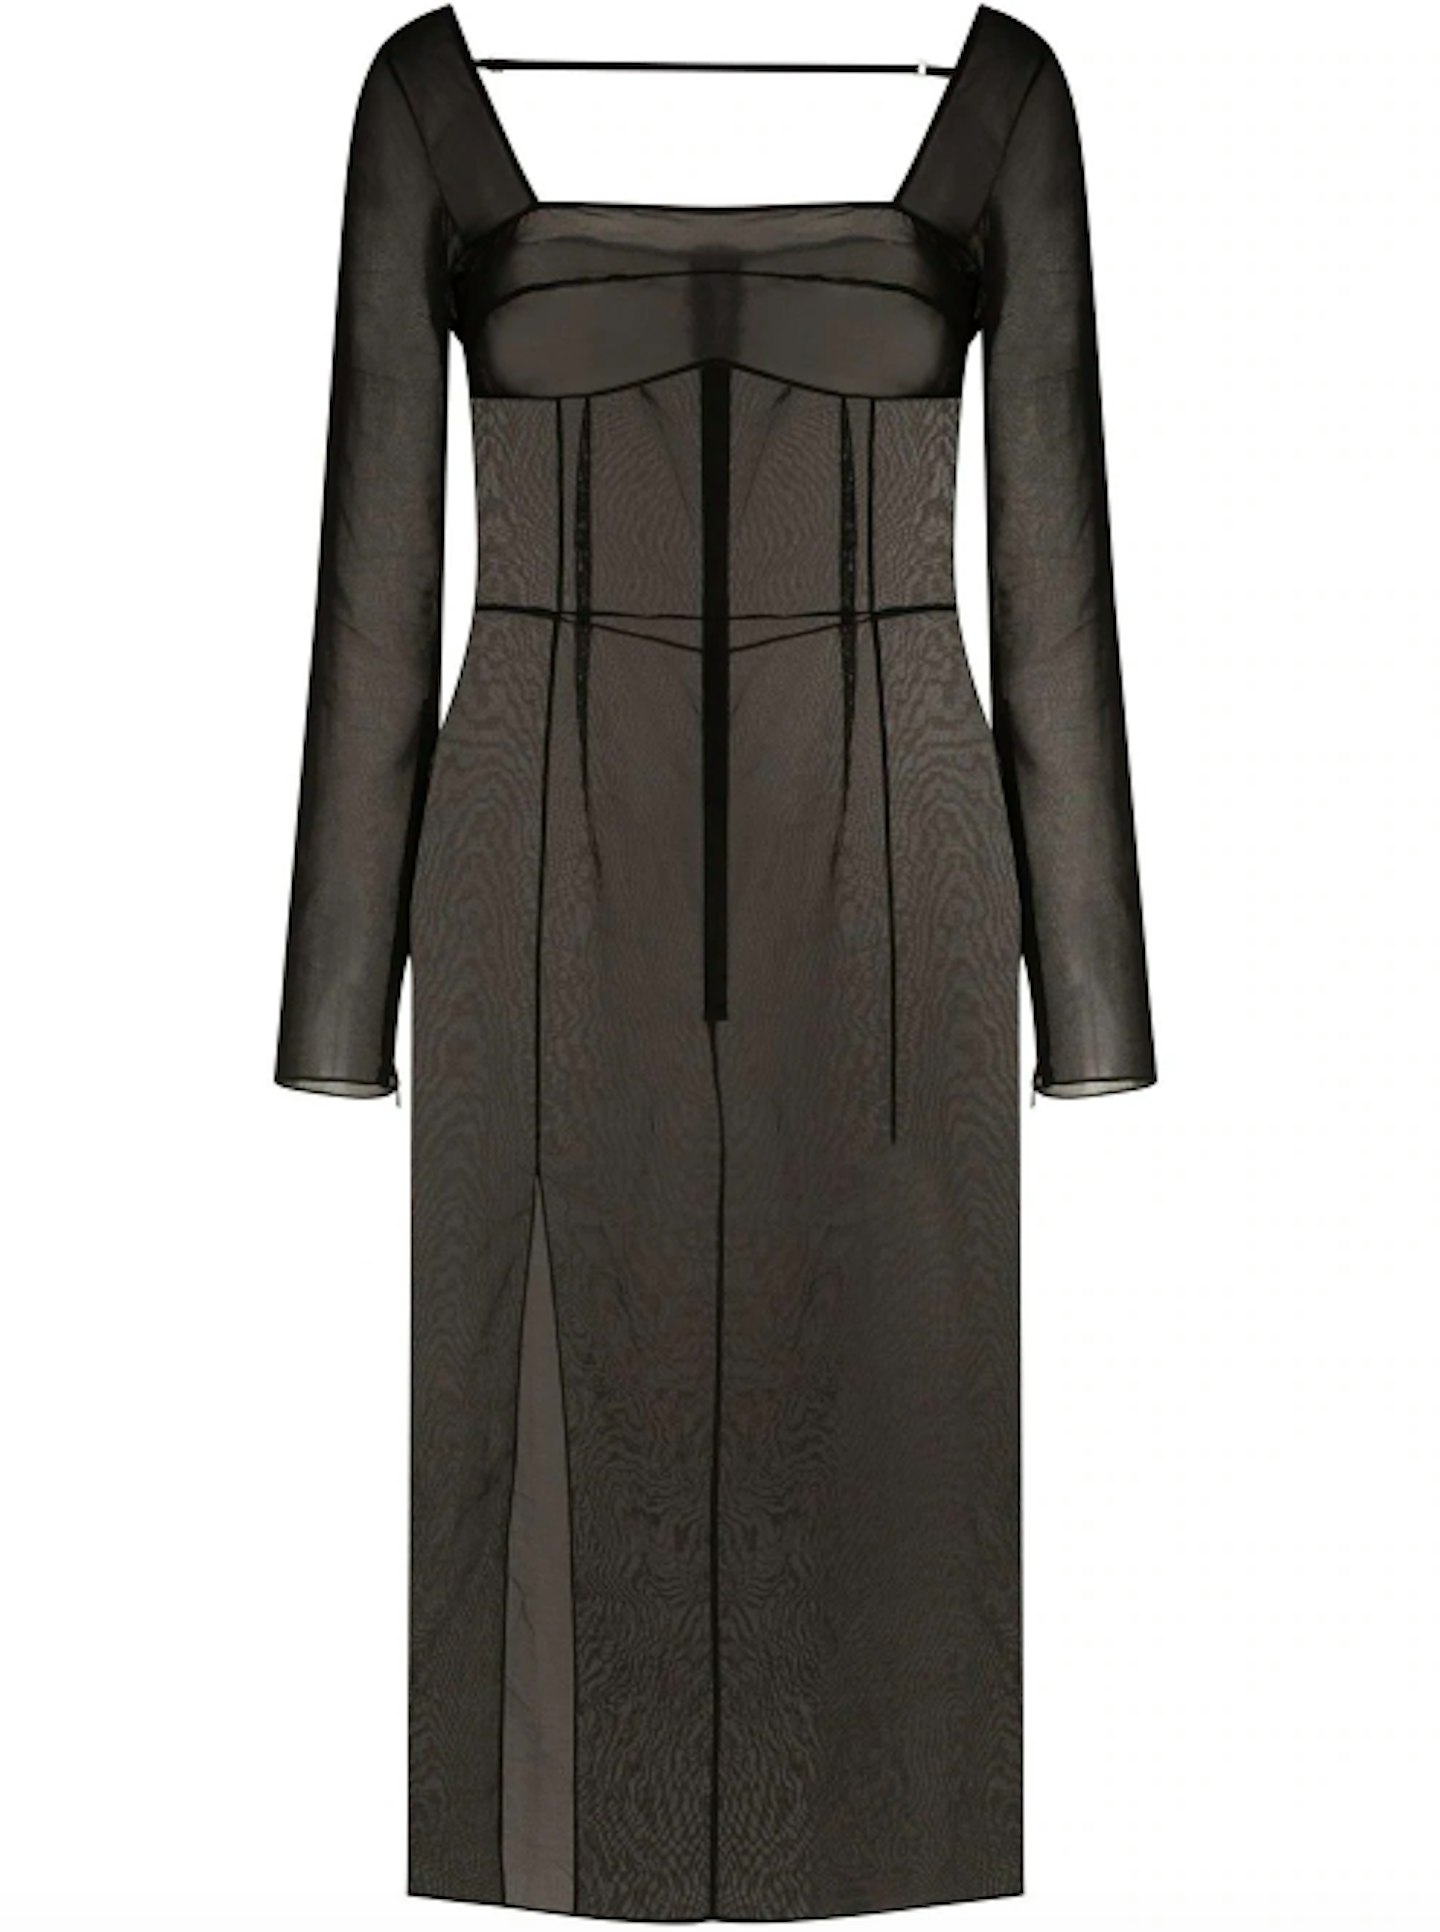 Supriya Lele, Square Neck Dress, £387 at Farfetch